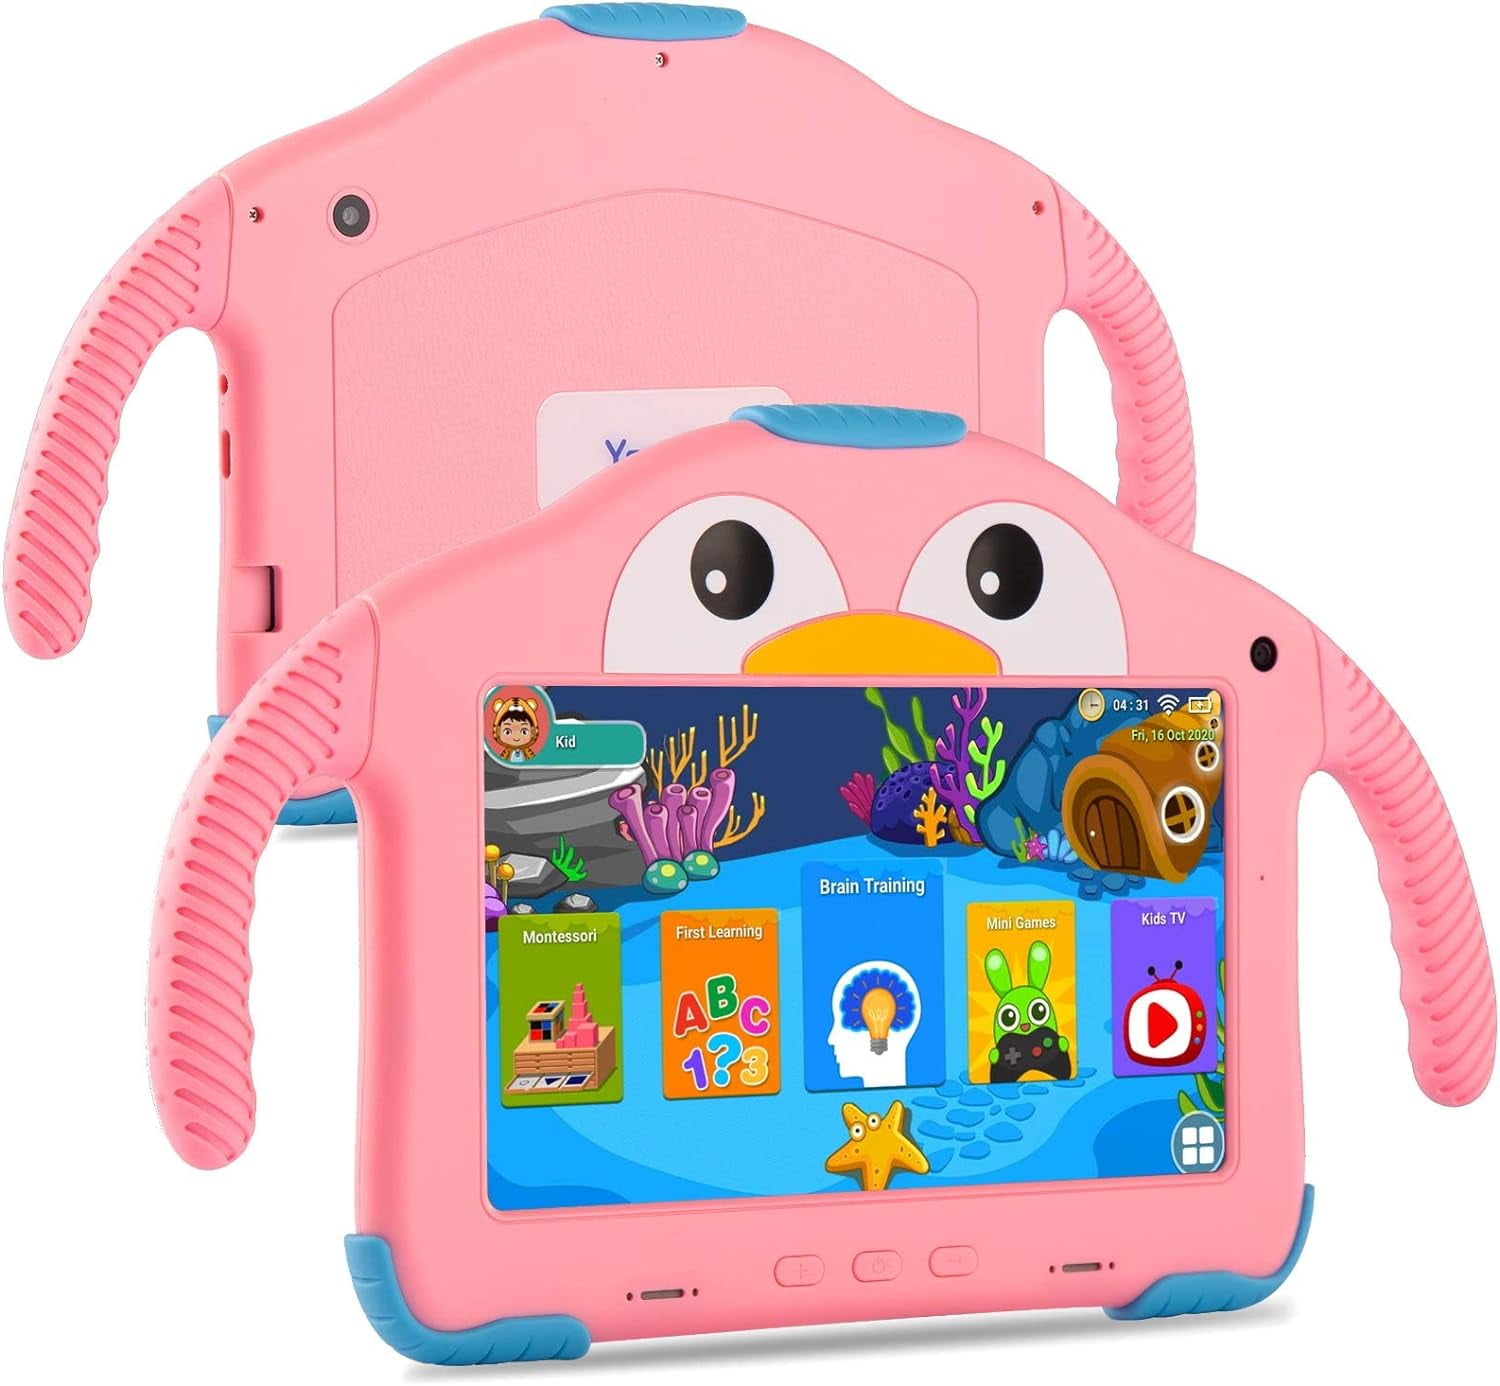 7 Kids Tablet Android Tablet PC 8 GB ROM 1024 * 600 Résolution WiFi Kids  Tablet PC, Vert 